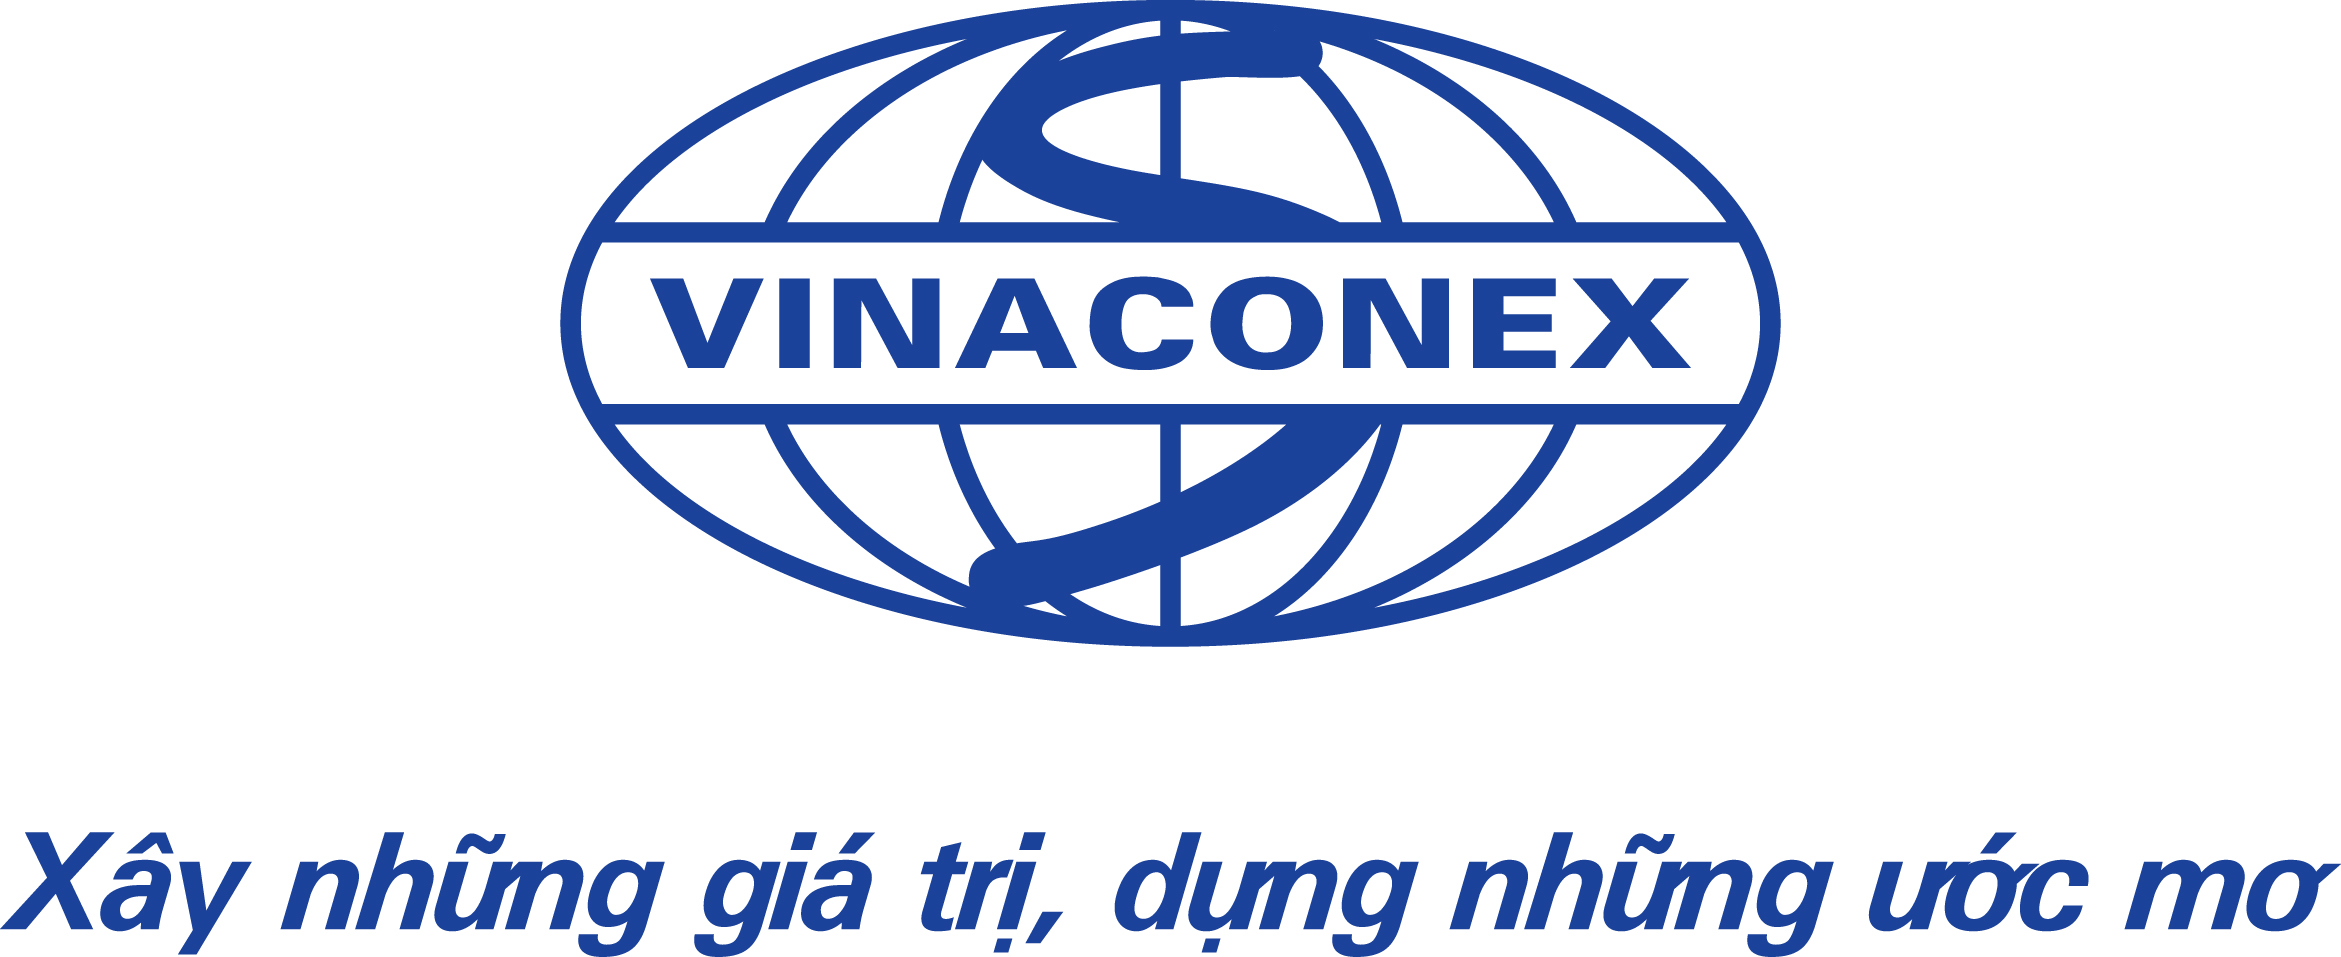 Logo Vinaconex - Trang chủ | Vinaconex